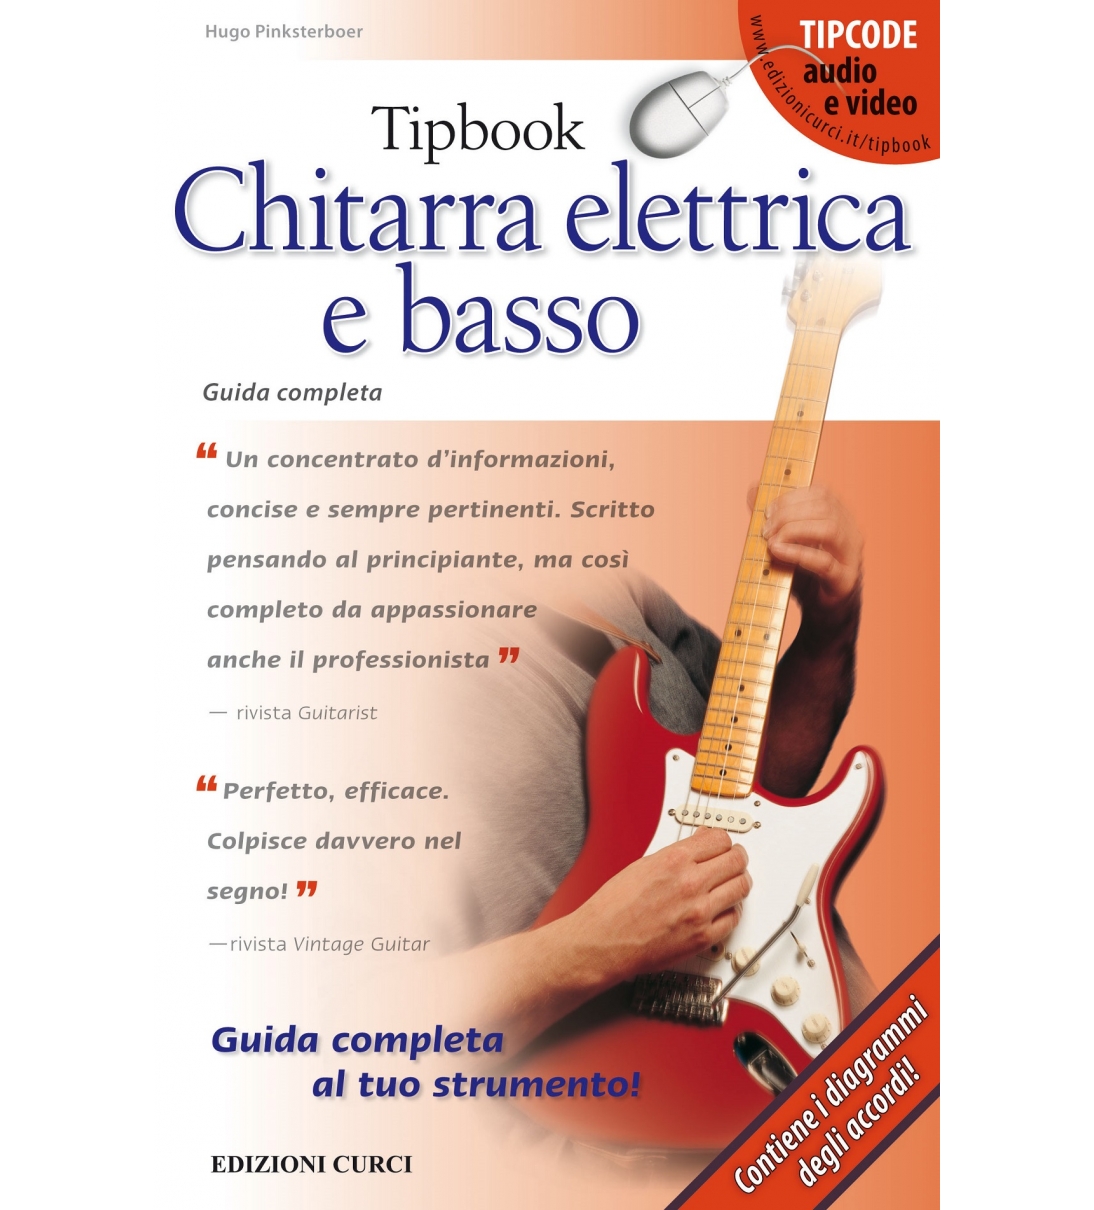 Tipbook Chitarra elettrica e basso